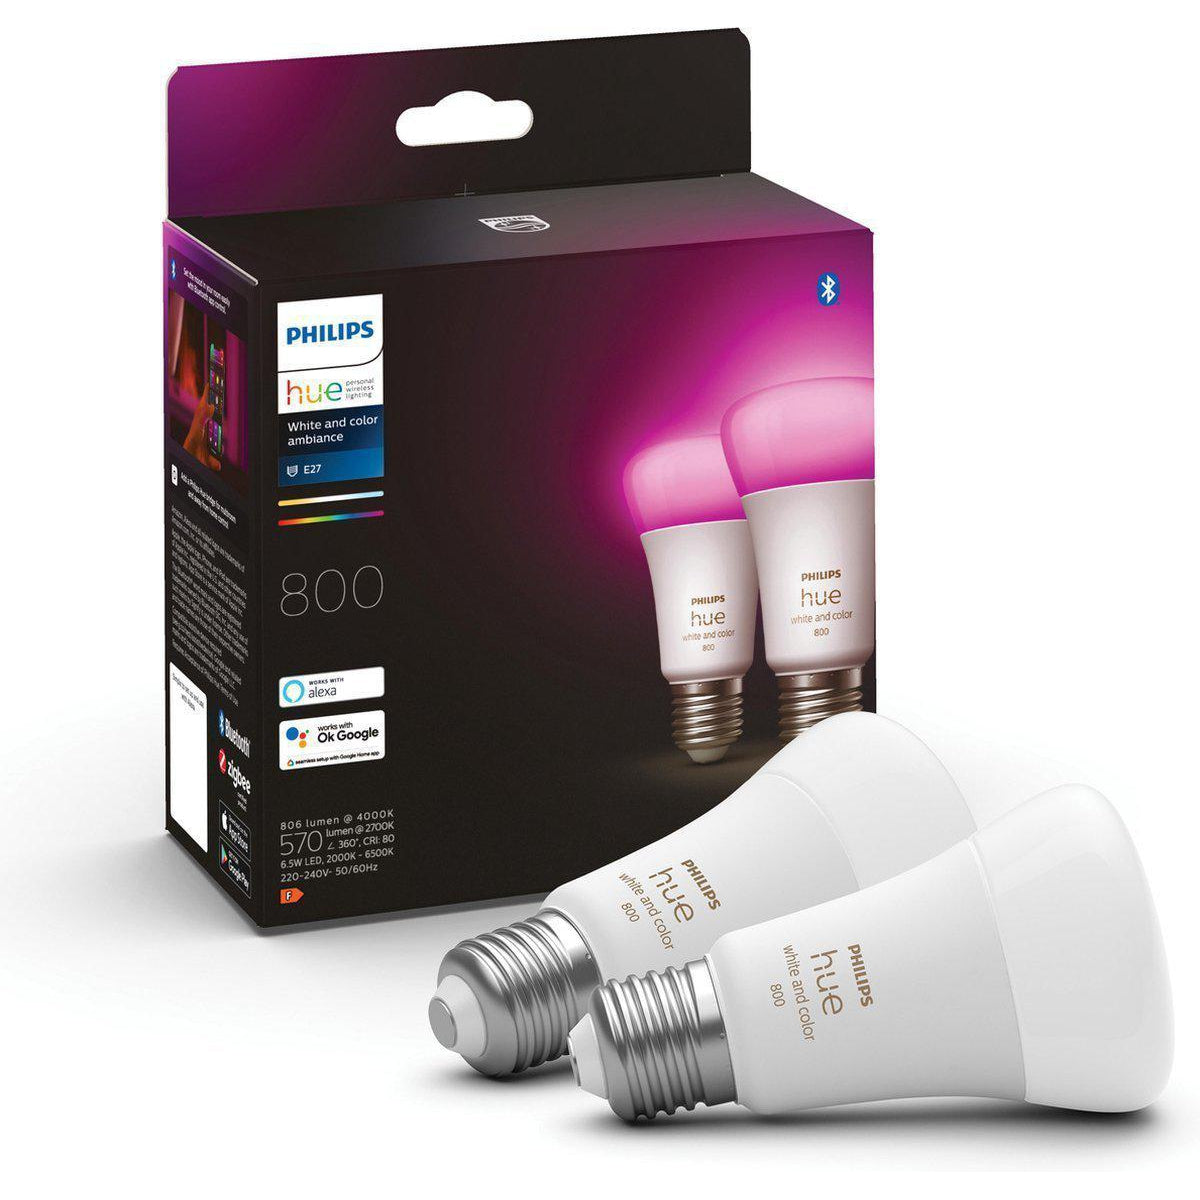 Doen Traditioneel vergeven Philips hue standaardlamp - wit en gekleurd - 2-pack - e27 - 800lm